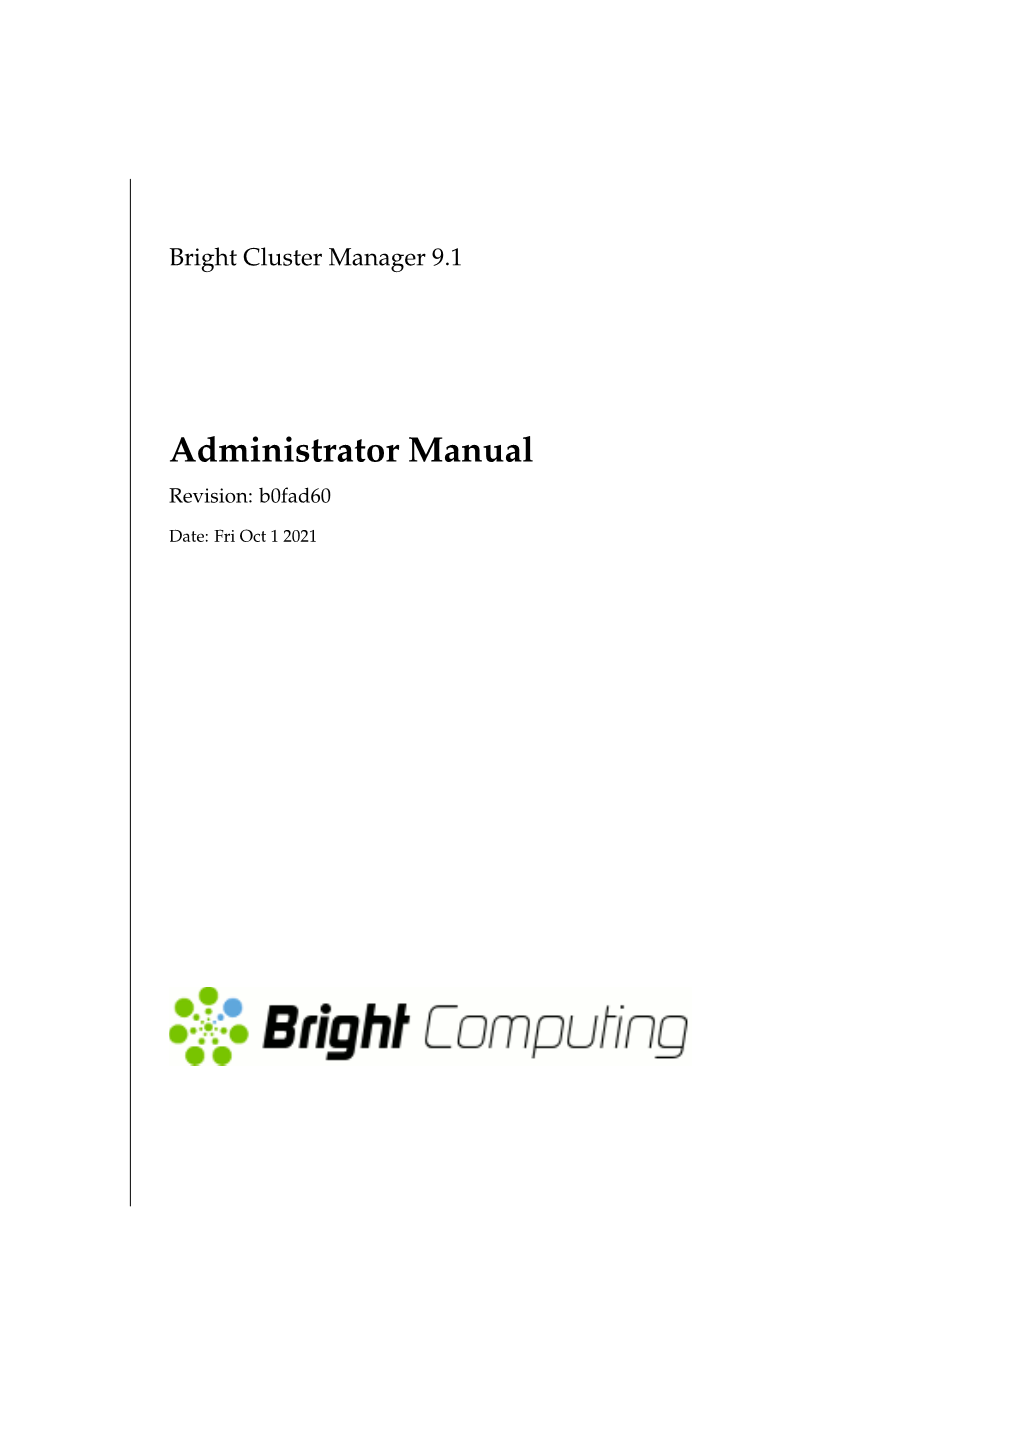 Administrator Manual Revision: B0fad60